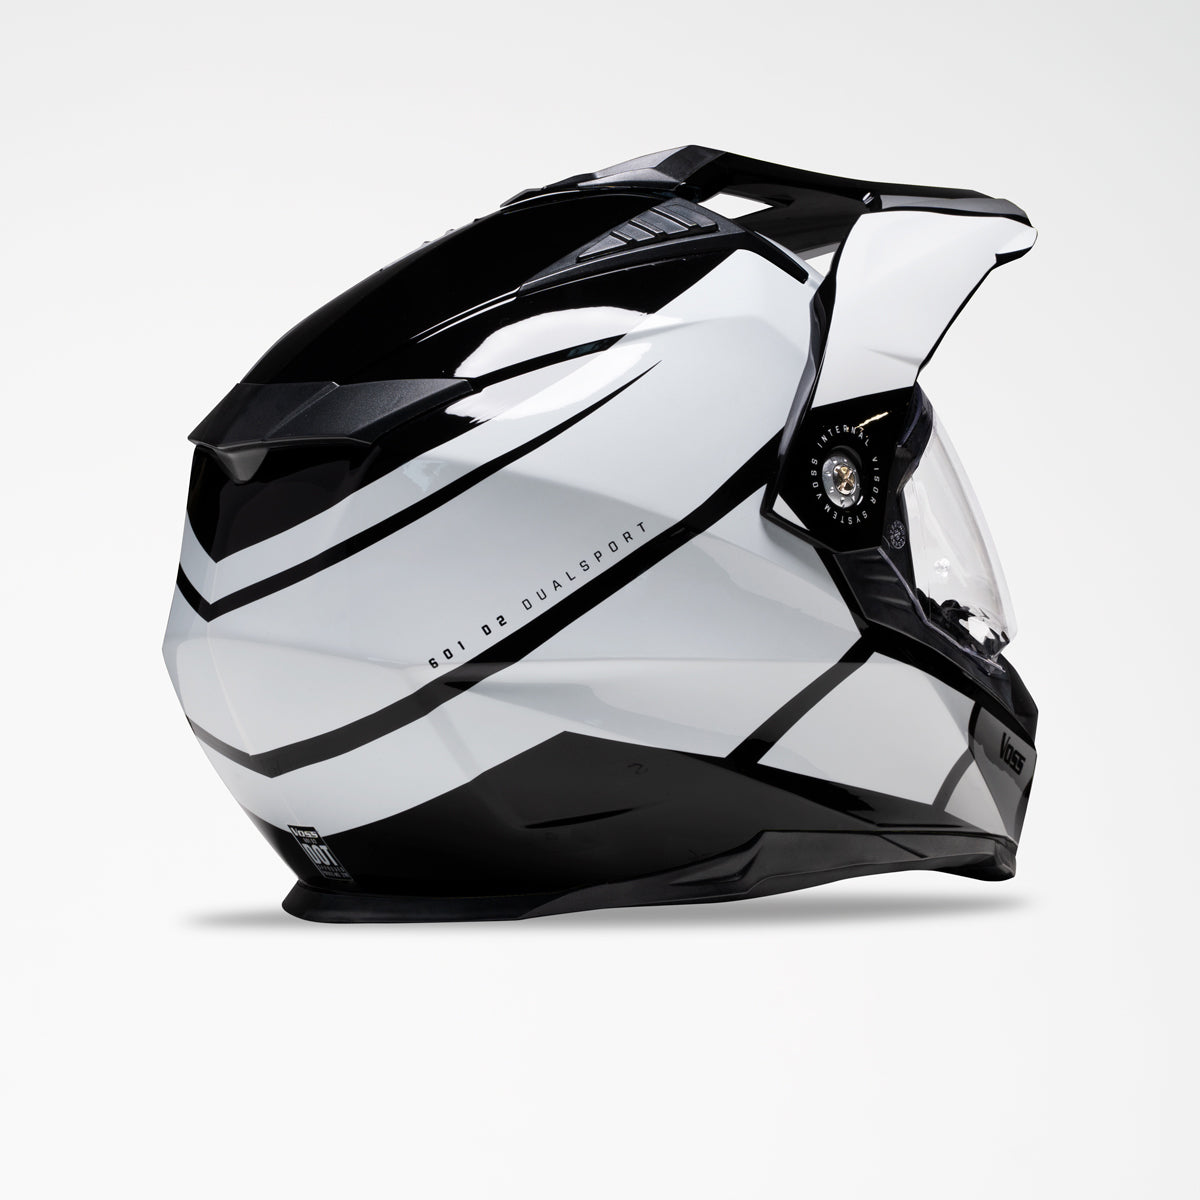  ILM Dual Sport Adventure Motorcycle Helmet with Pinlock  Compatible Sun Visor Snowmobile ATV Dirt Bike Off Road Casco Model WS902  (Carbon Fiber, S) : Automotive